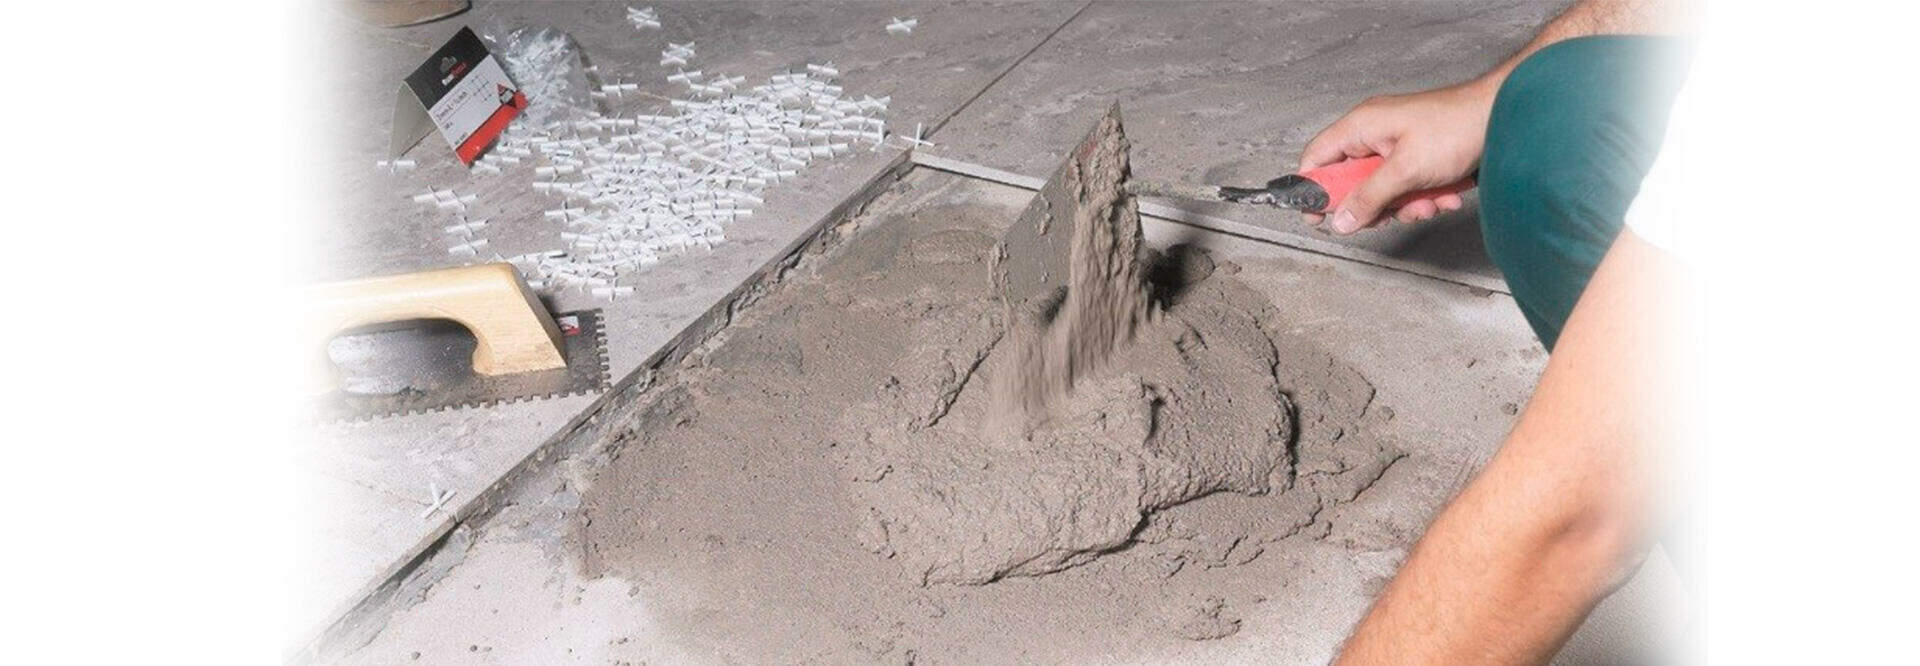 Mortero de cemento - Wikipedia, la enciclopedia libre